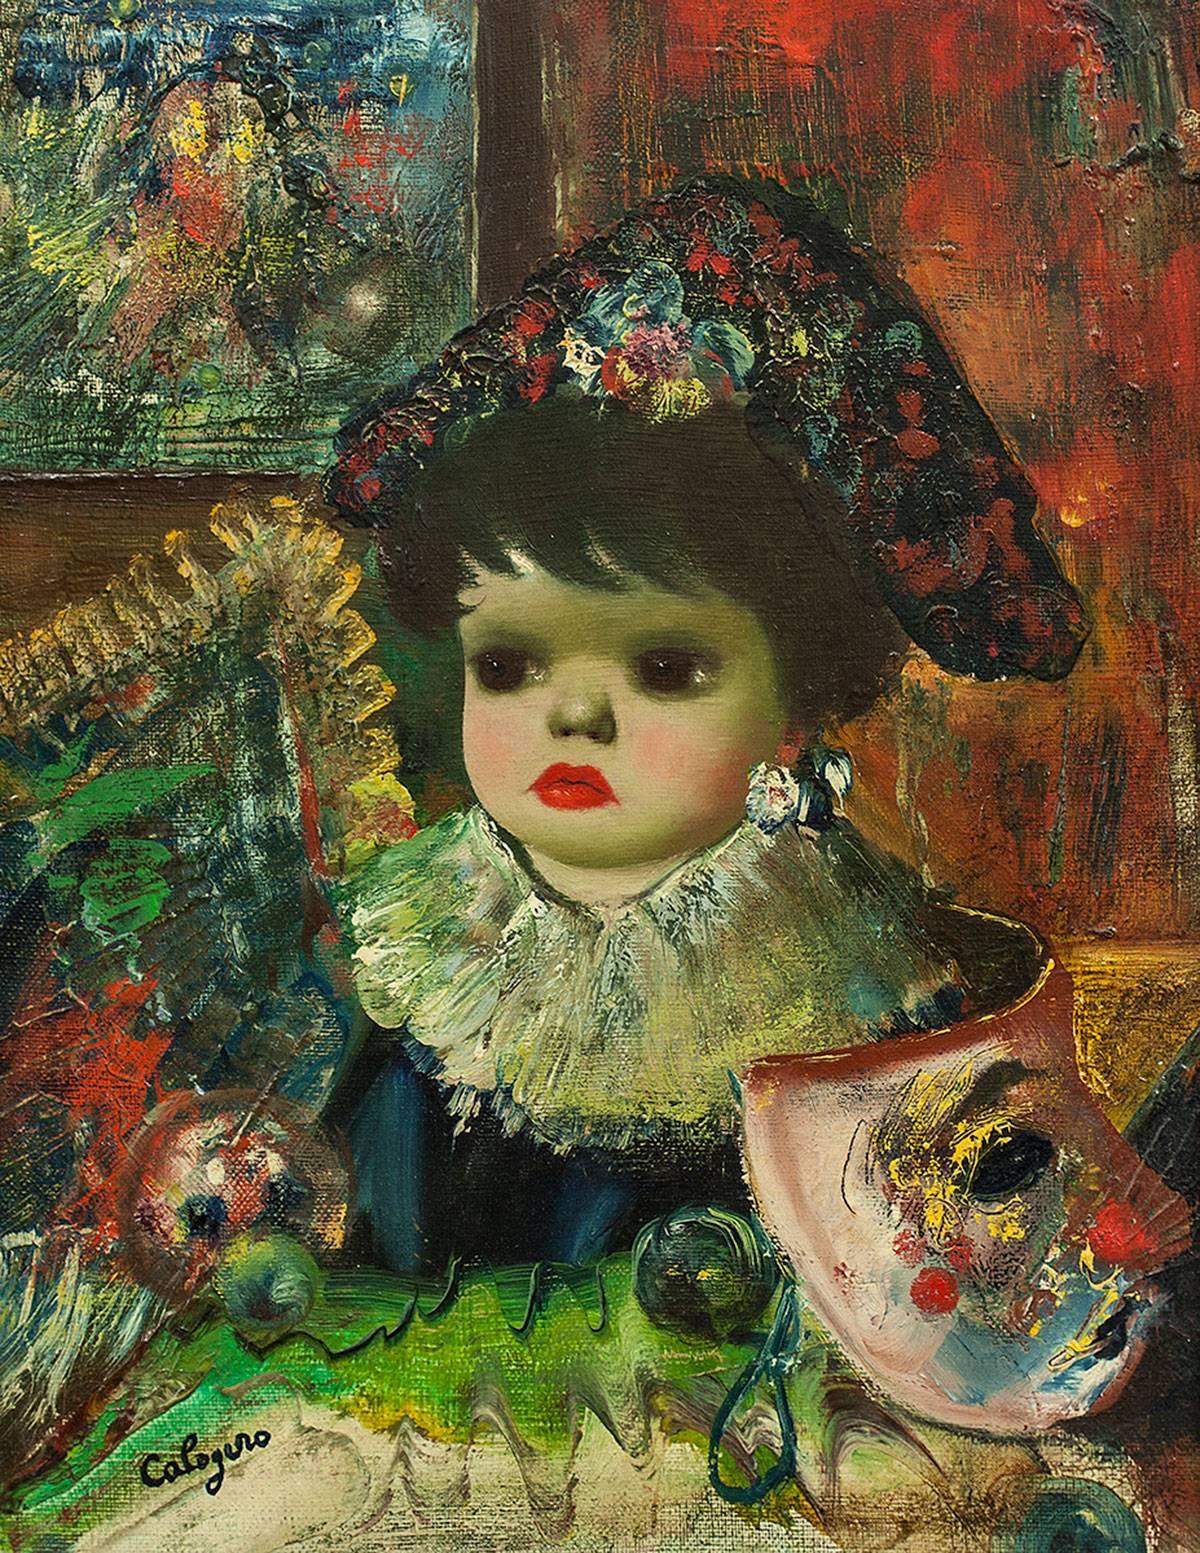 L'Enfant, Colorful Surrealist Child with Venice Carnevale Masque - Painting by Jean Calogero